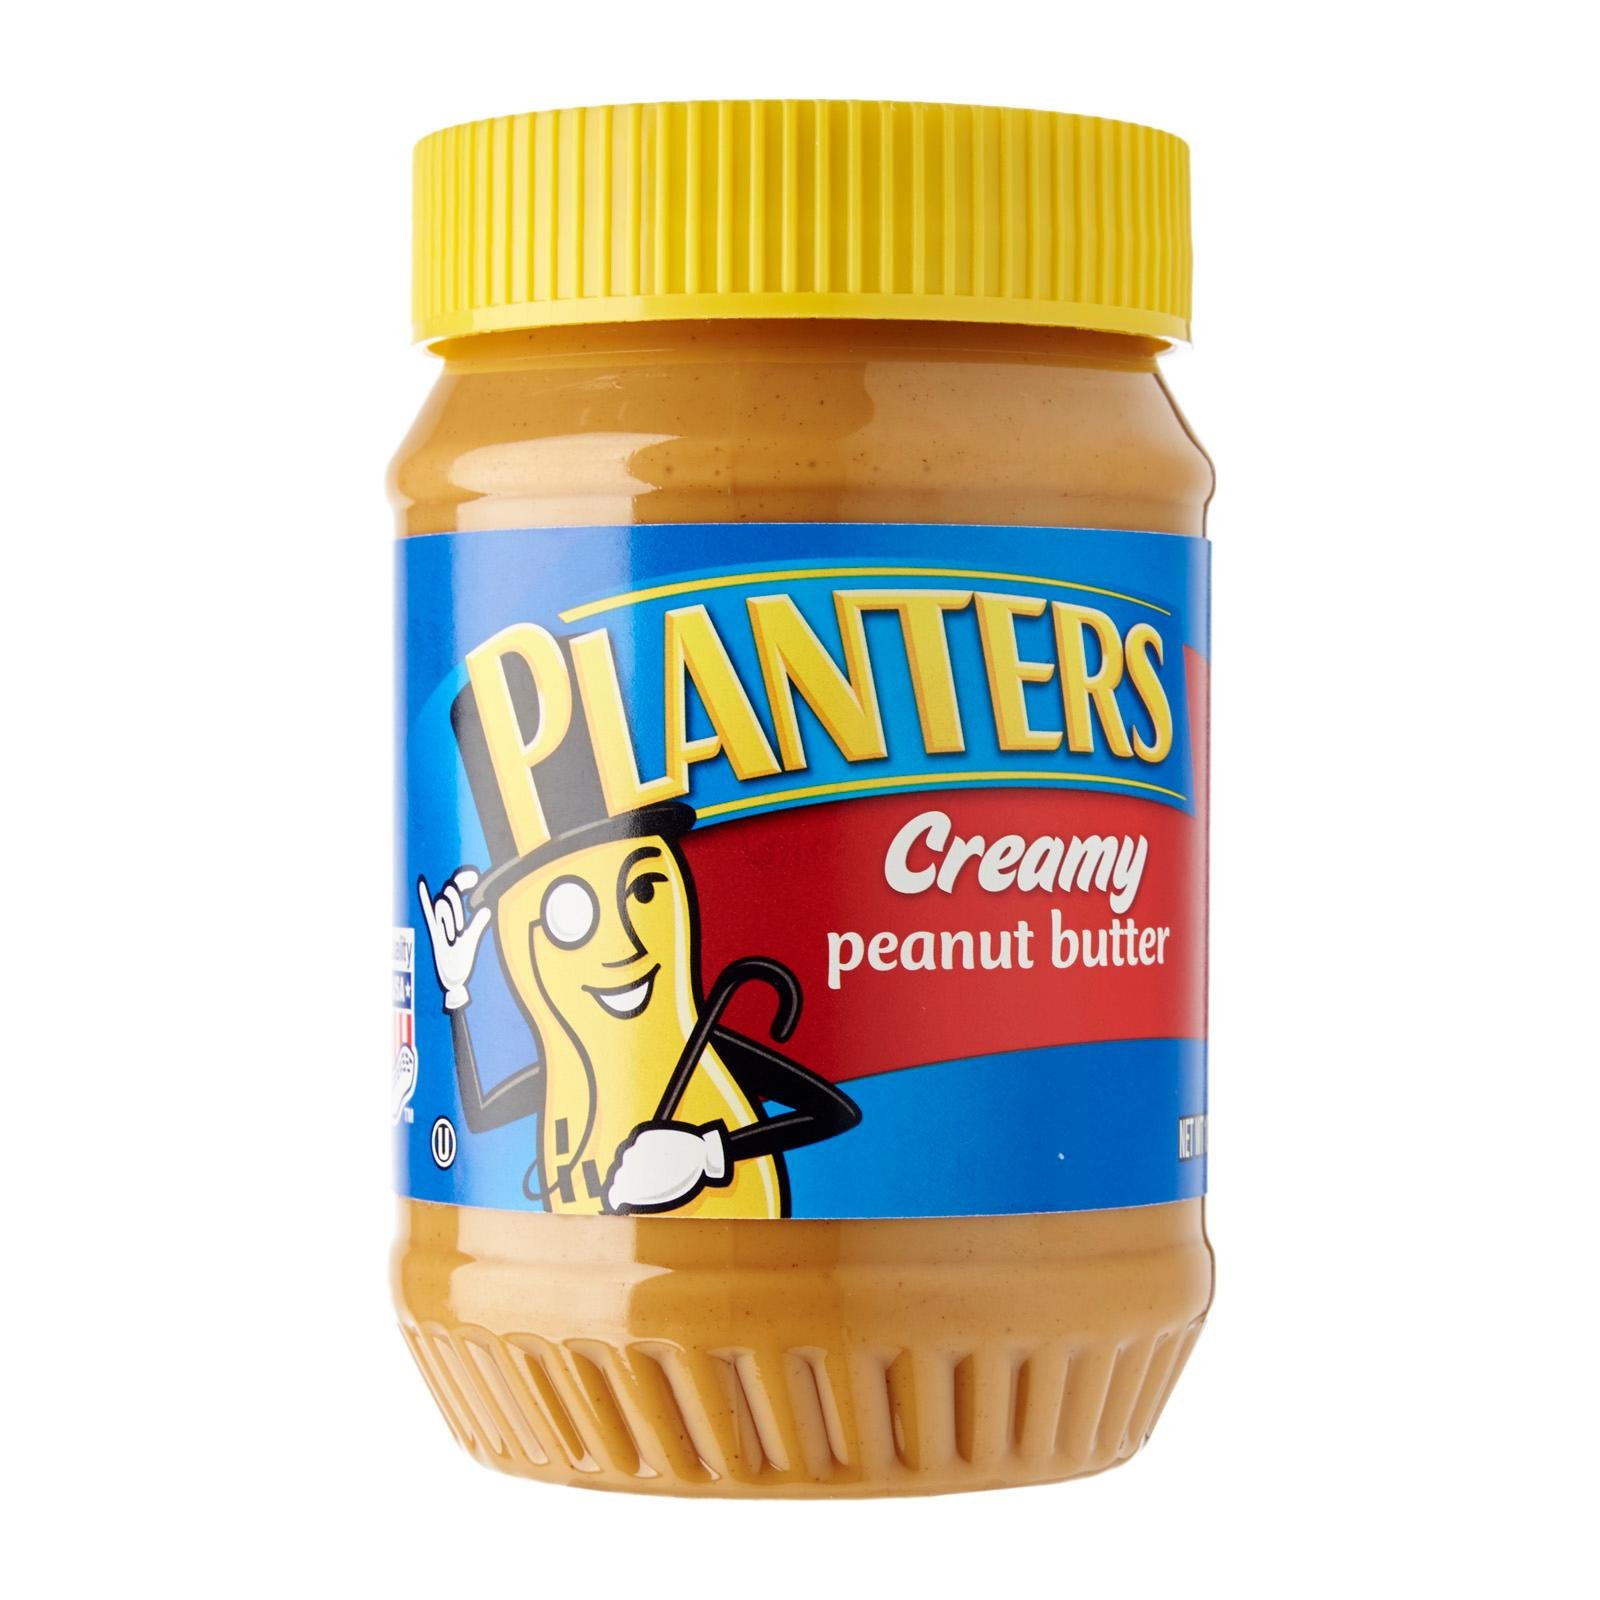 Planters Peanut Butter Creamy